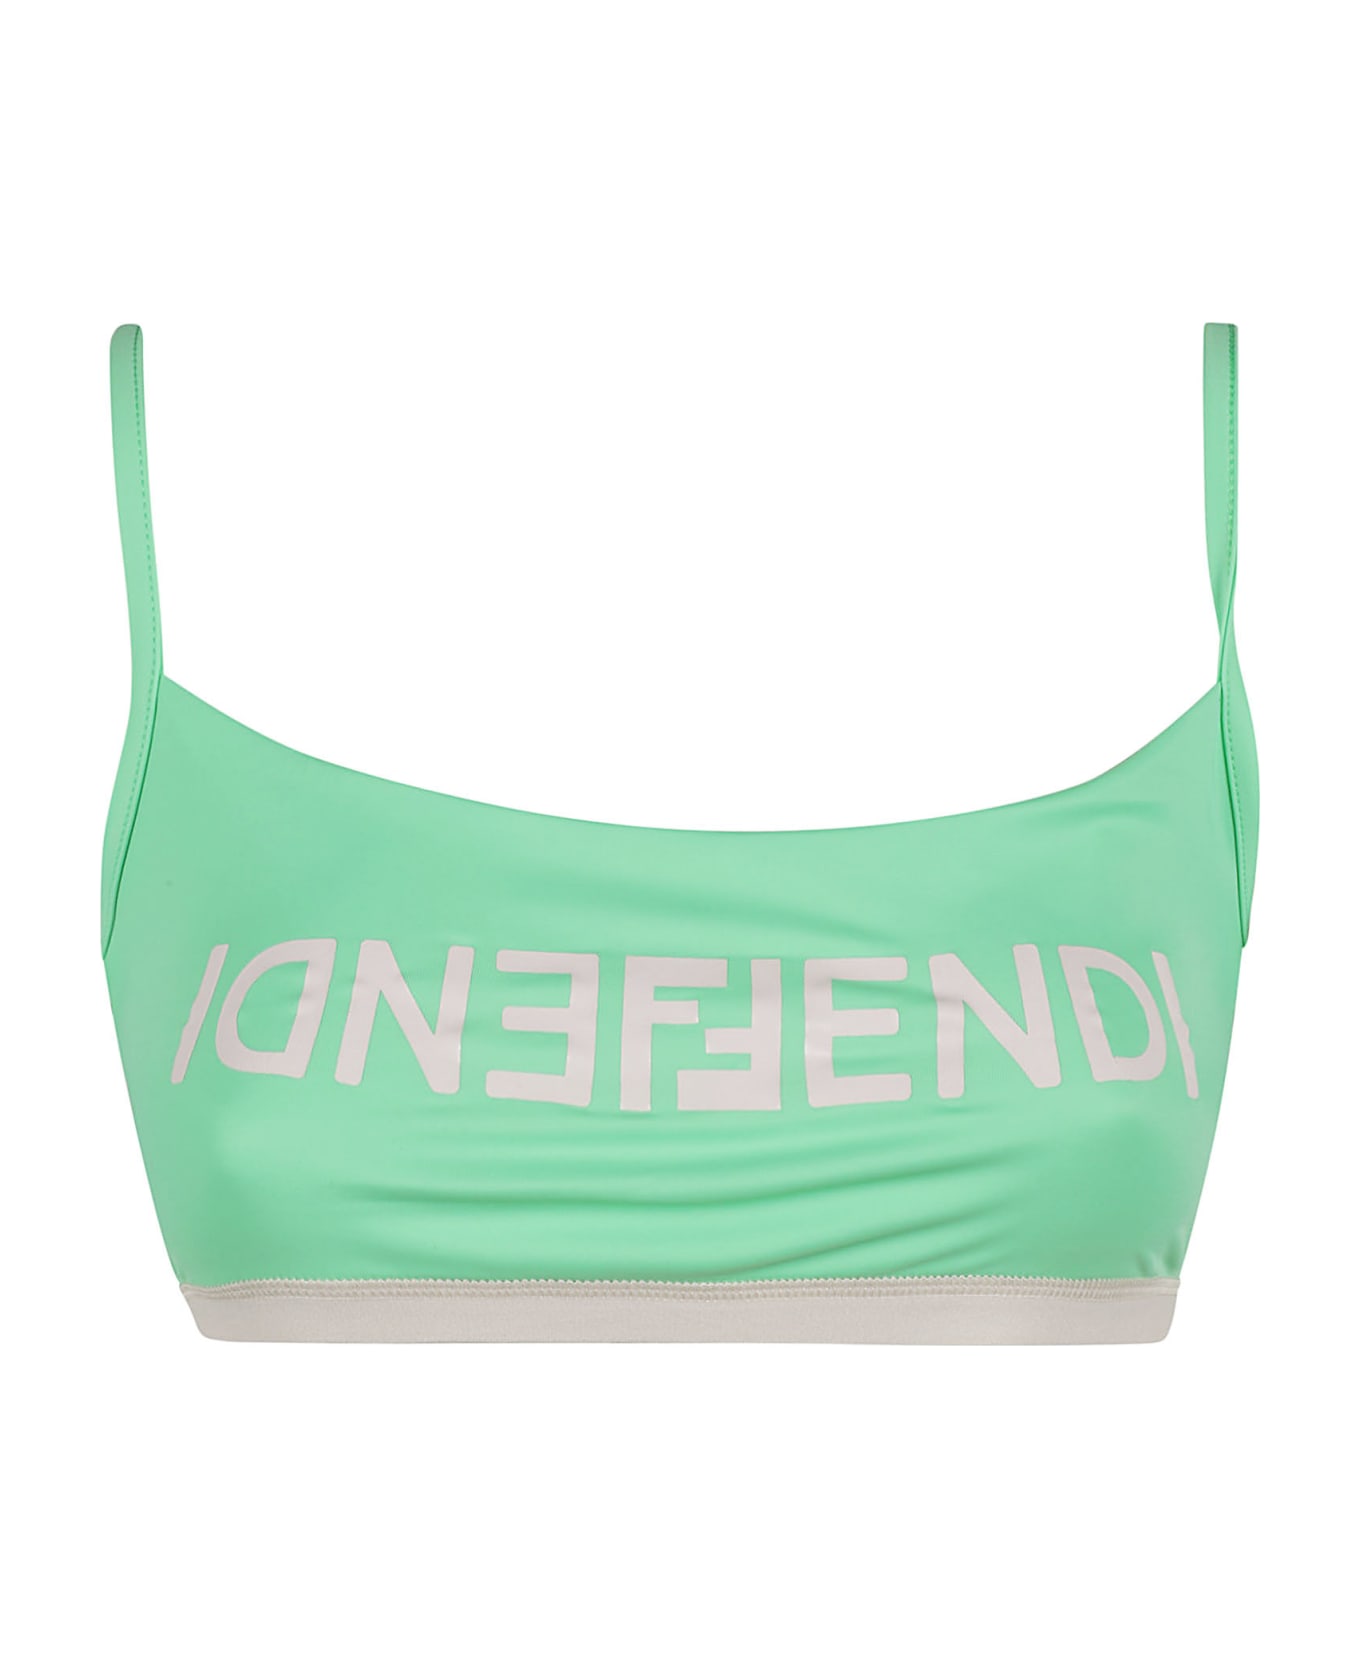 Fendi Logo Print Top - Mint green